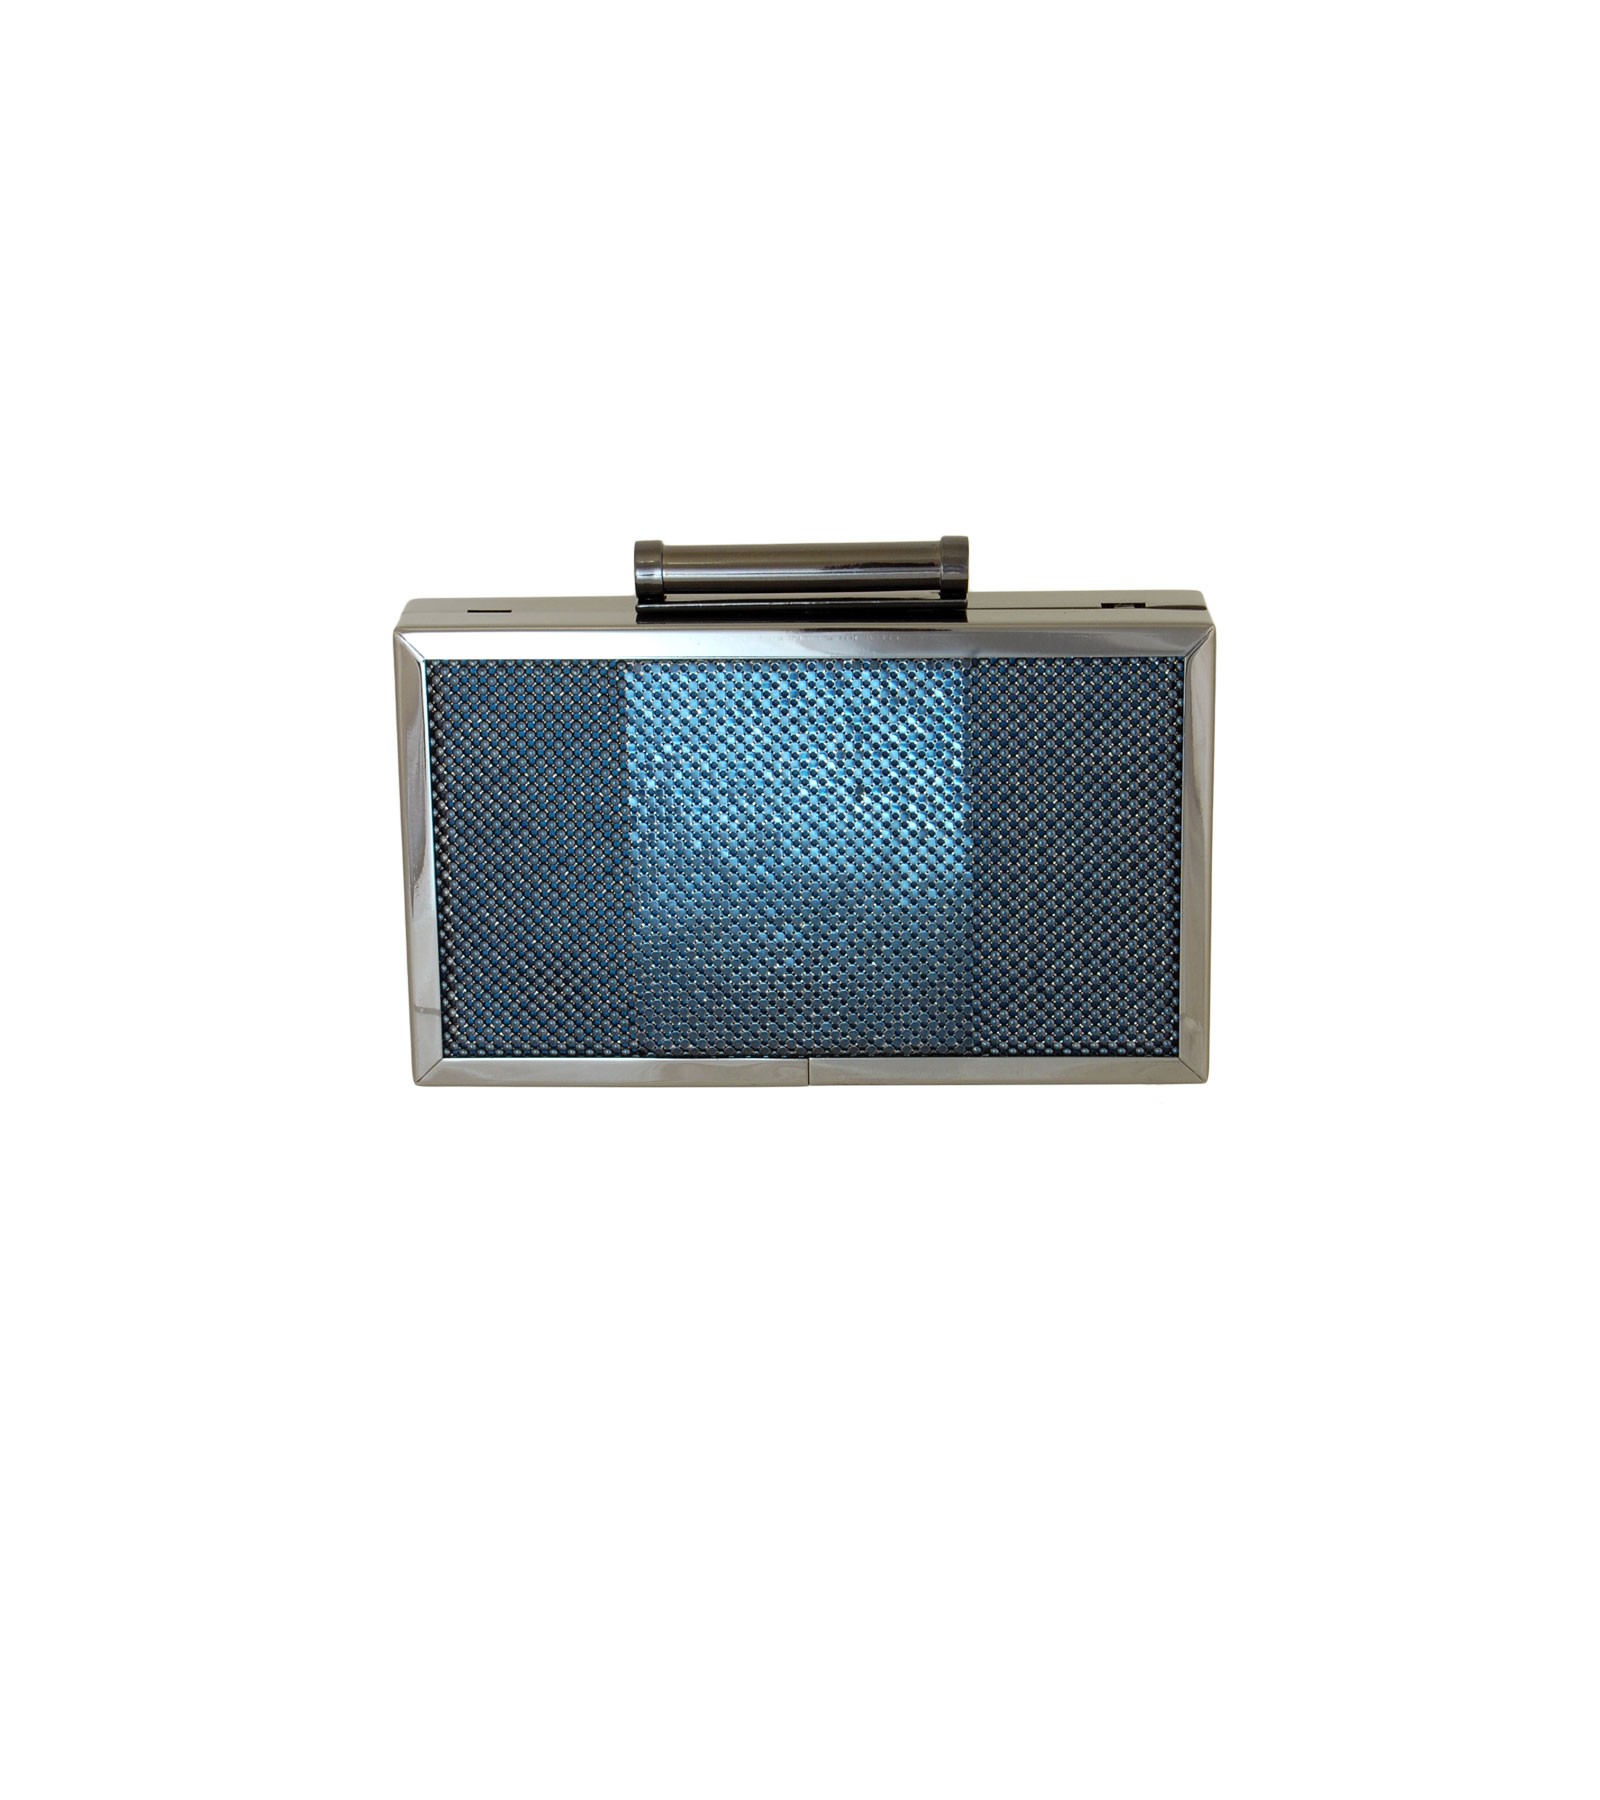 1-5919-md-midnight-blue-box-clutch-evening-bag-crossbody-bag-metallic-minaudiere